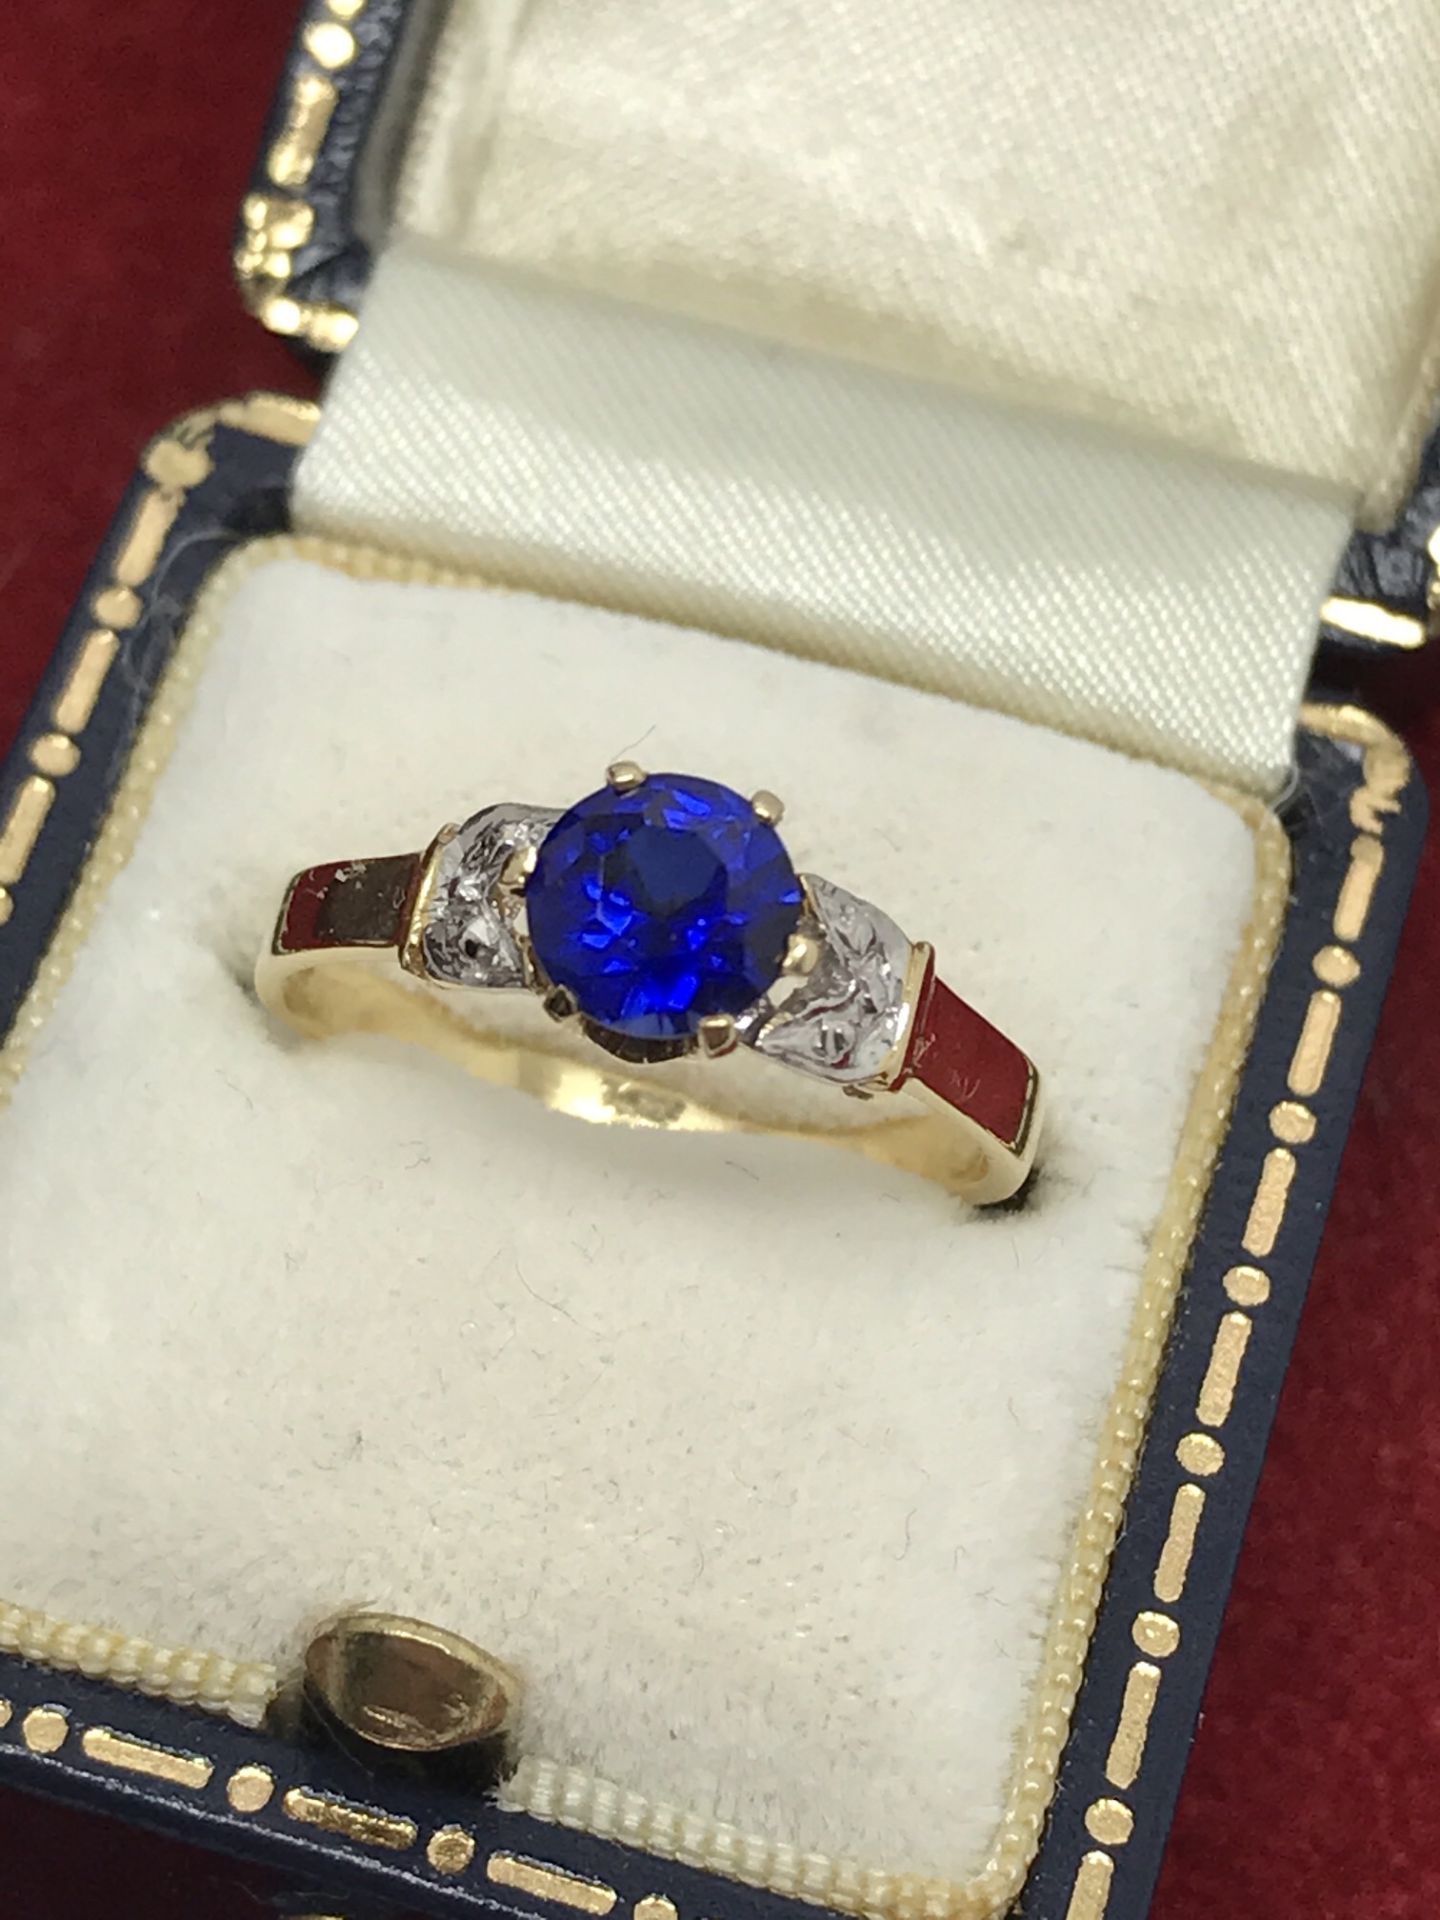 STUNNING BLUE SAPPHIRE & DIAMOND RING SET IN 18ct GOLD - Image 2 of 7